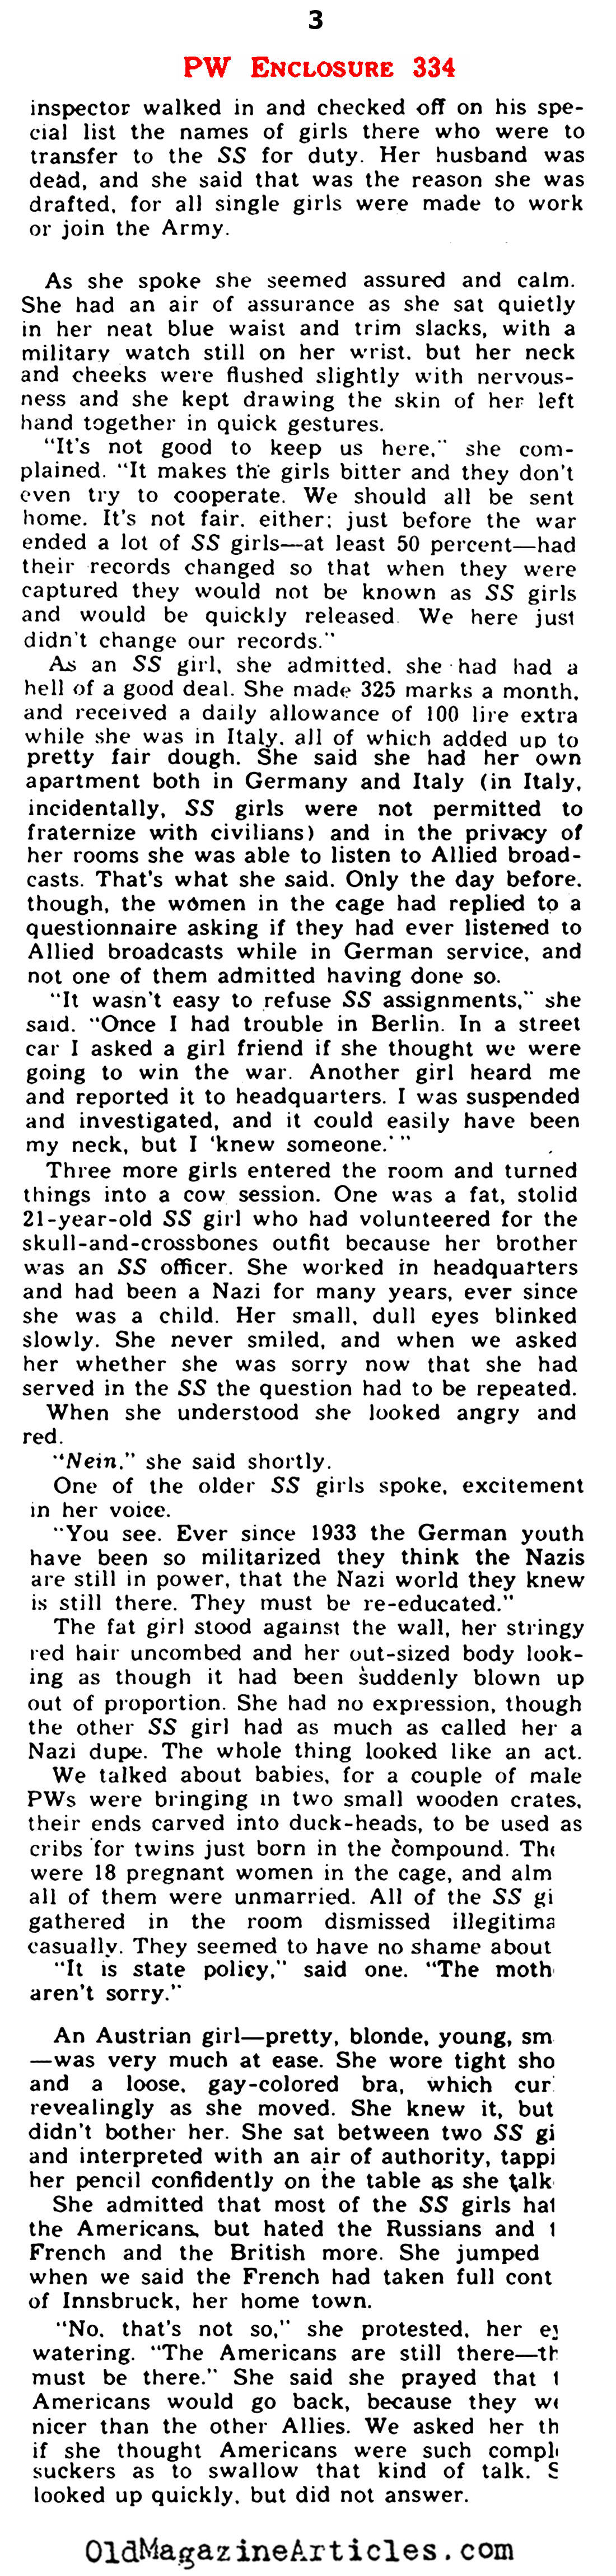 P.O.W. Camp for the S.S. Women (Yank Magazine, 1945)